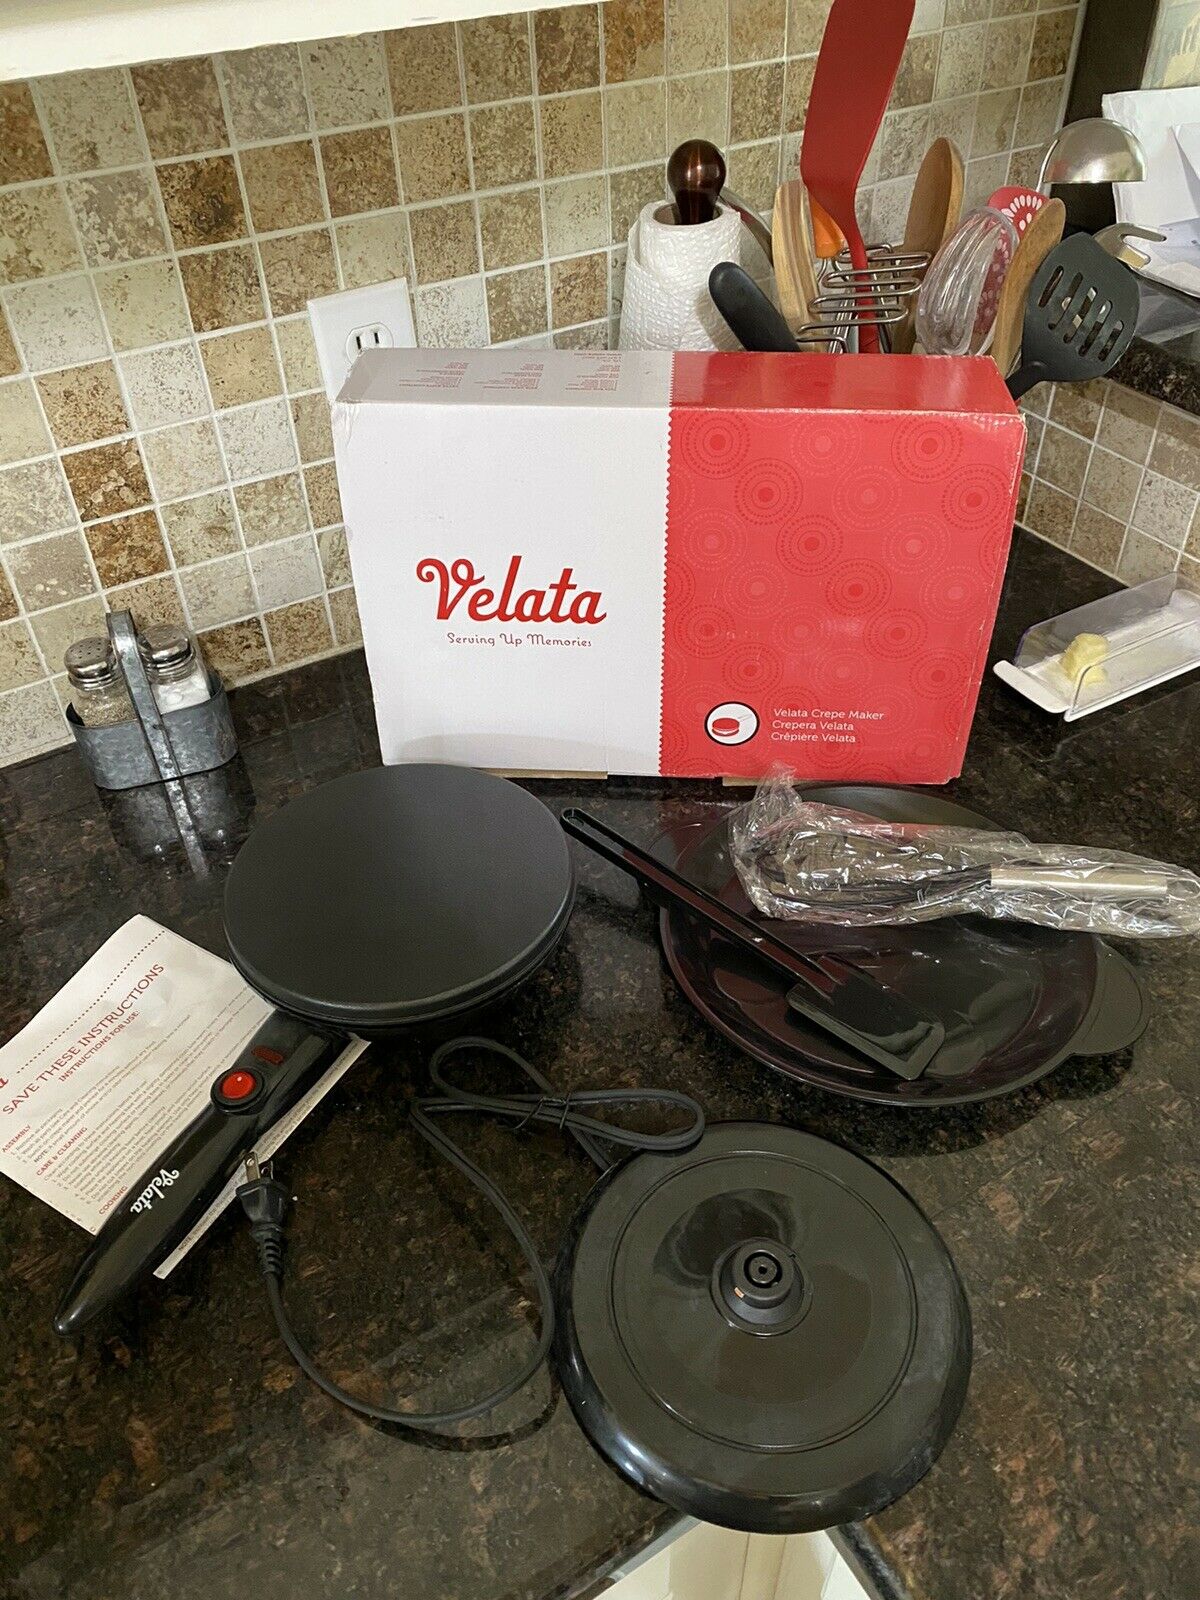 Velata Crepe Maker New In Open Box. Never Used. Sa501